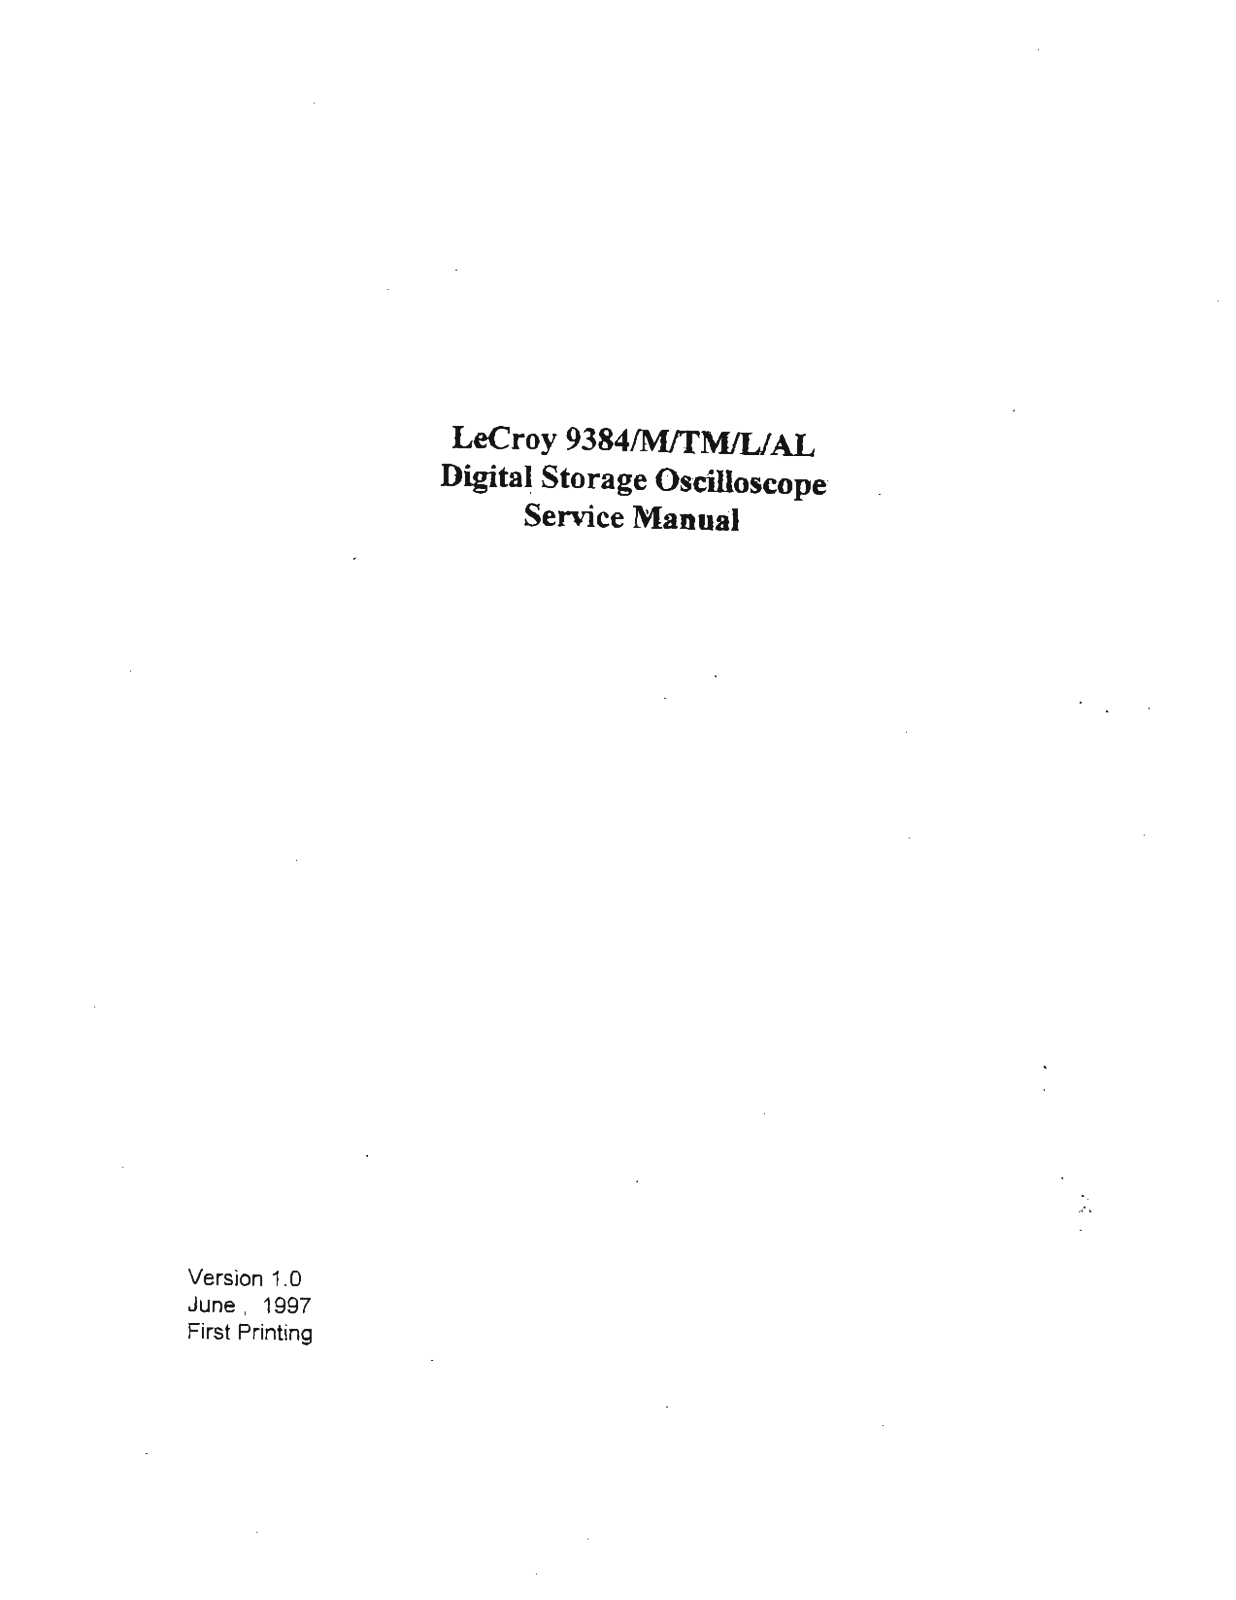 LeCroy 9384AL, 9384L, 9384TM, 9384M, 9384 Service Manual